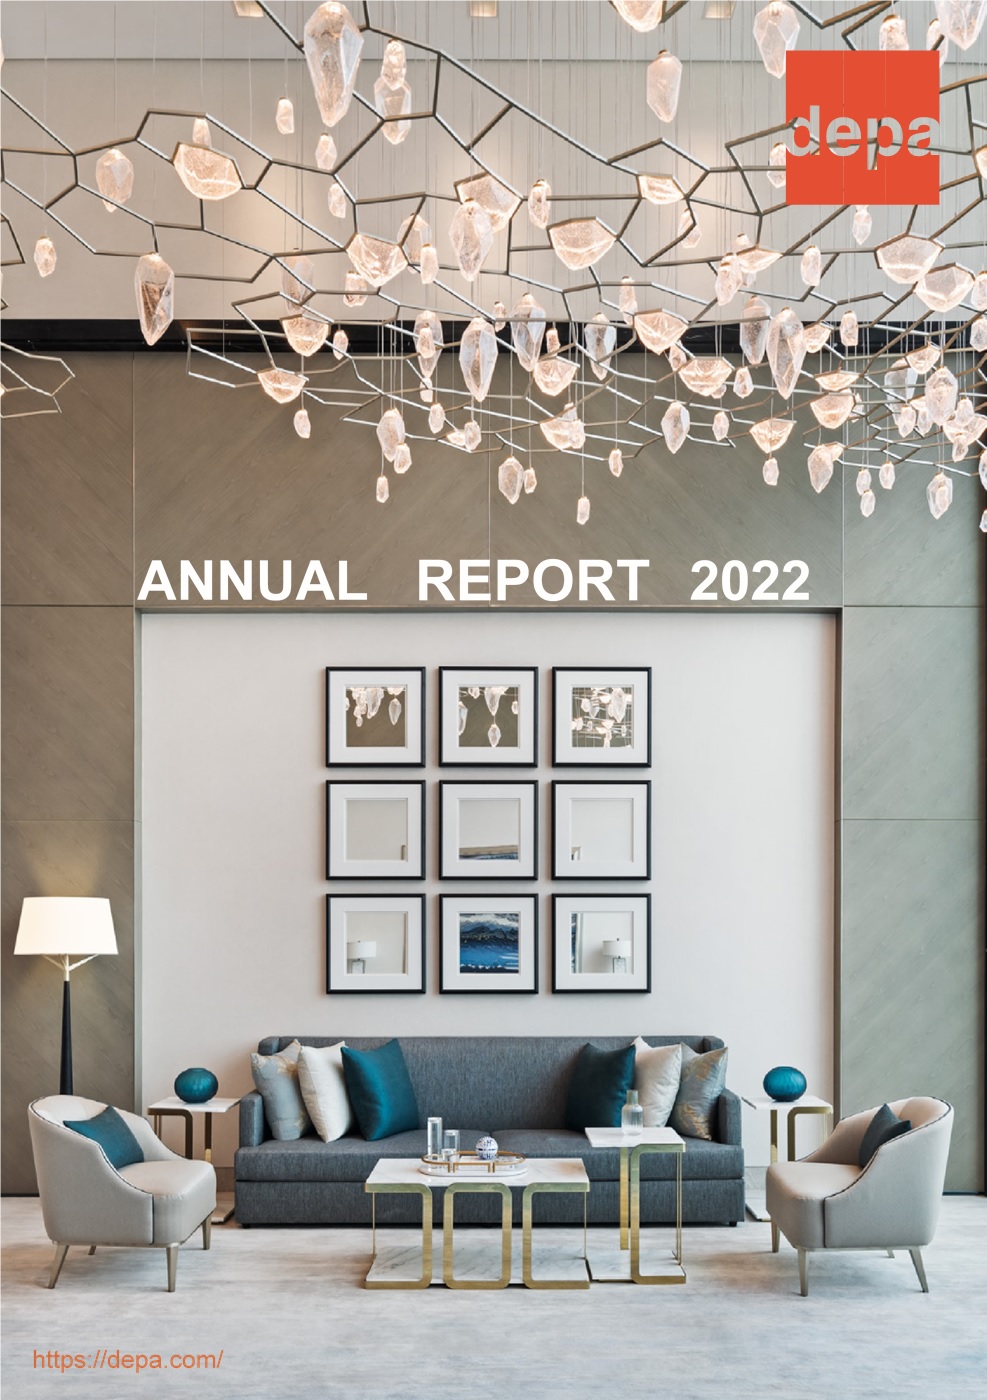  Annual Report 2022